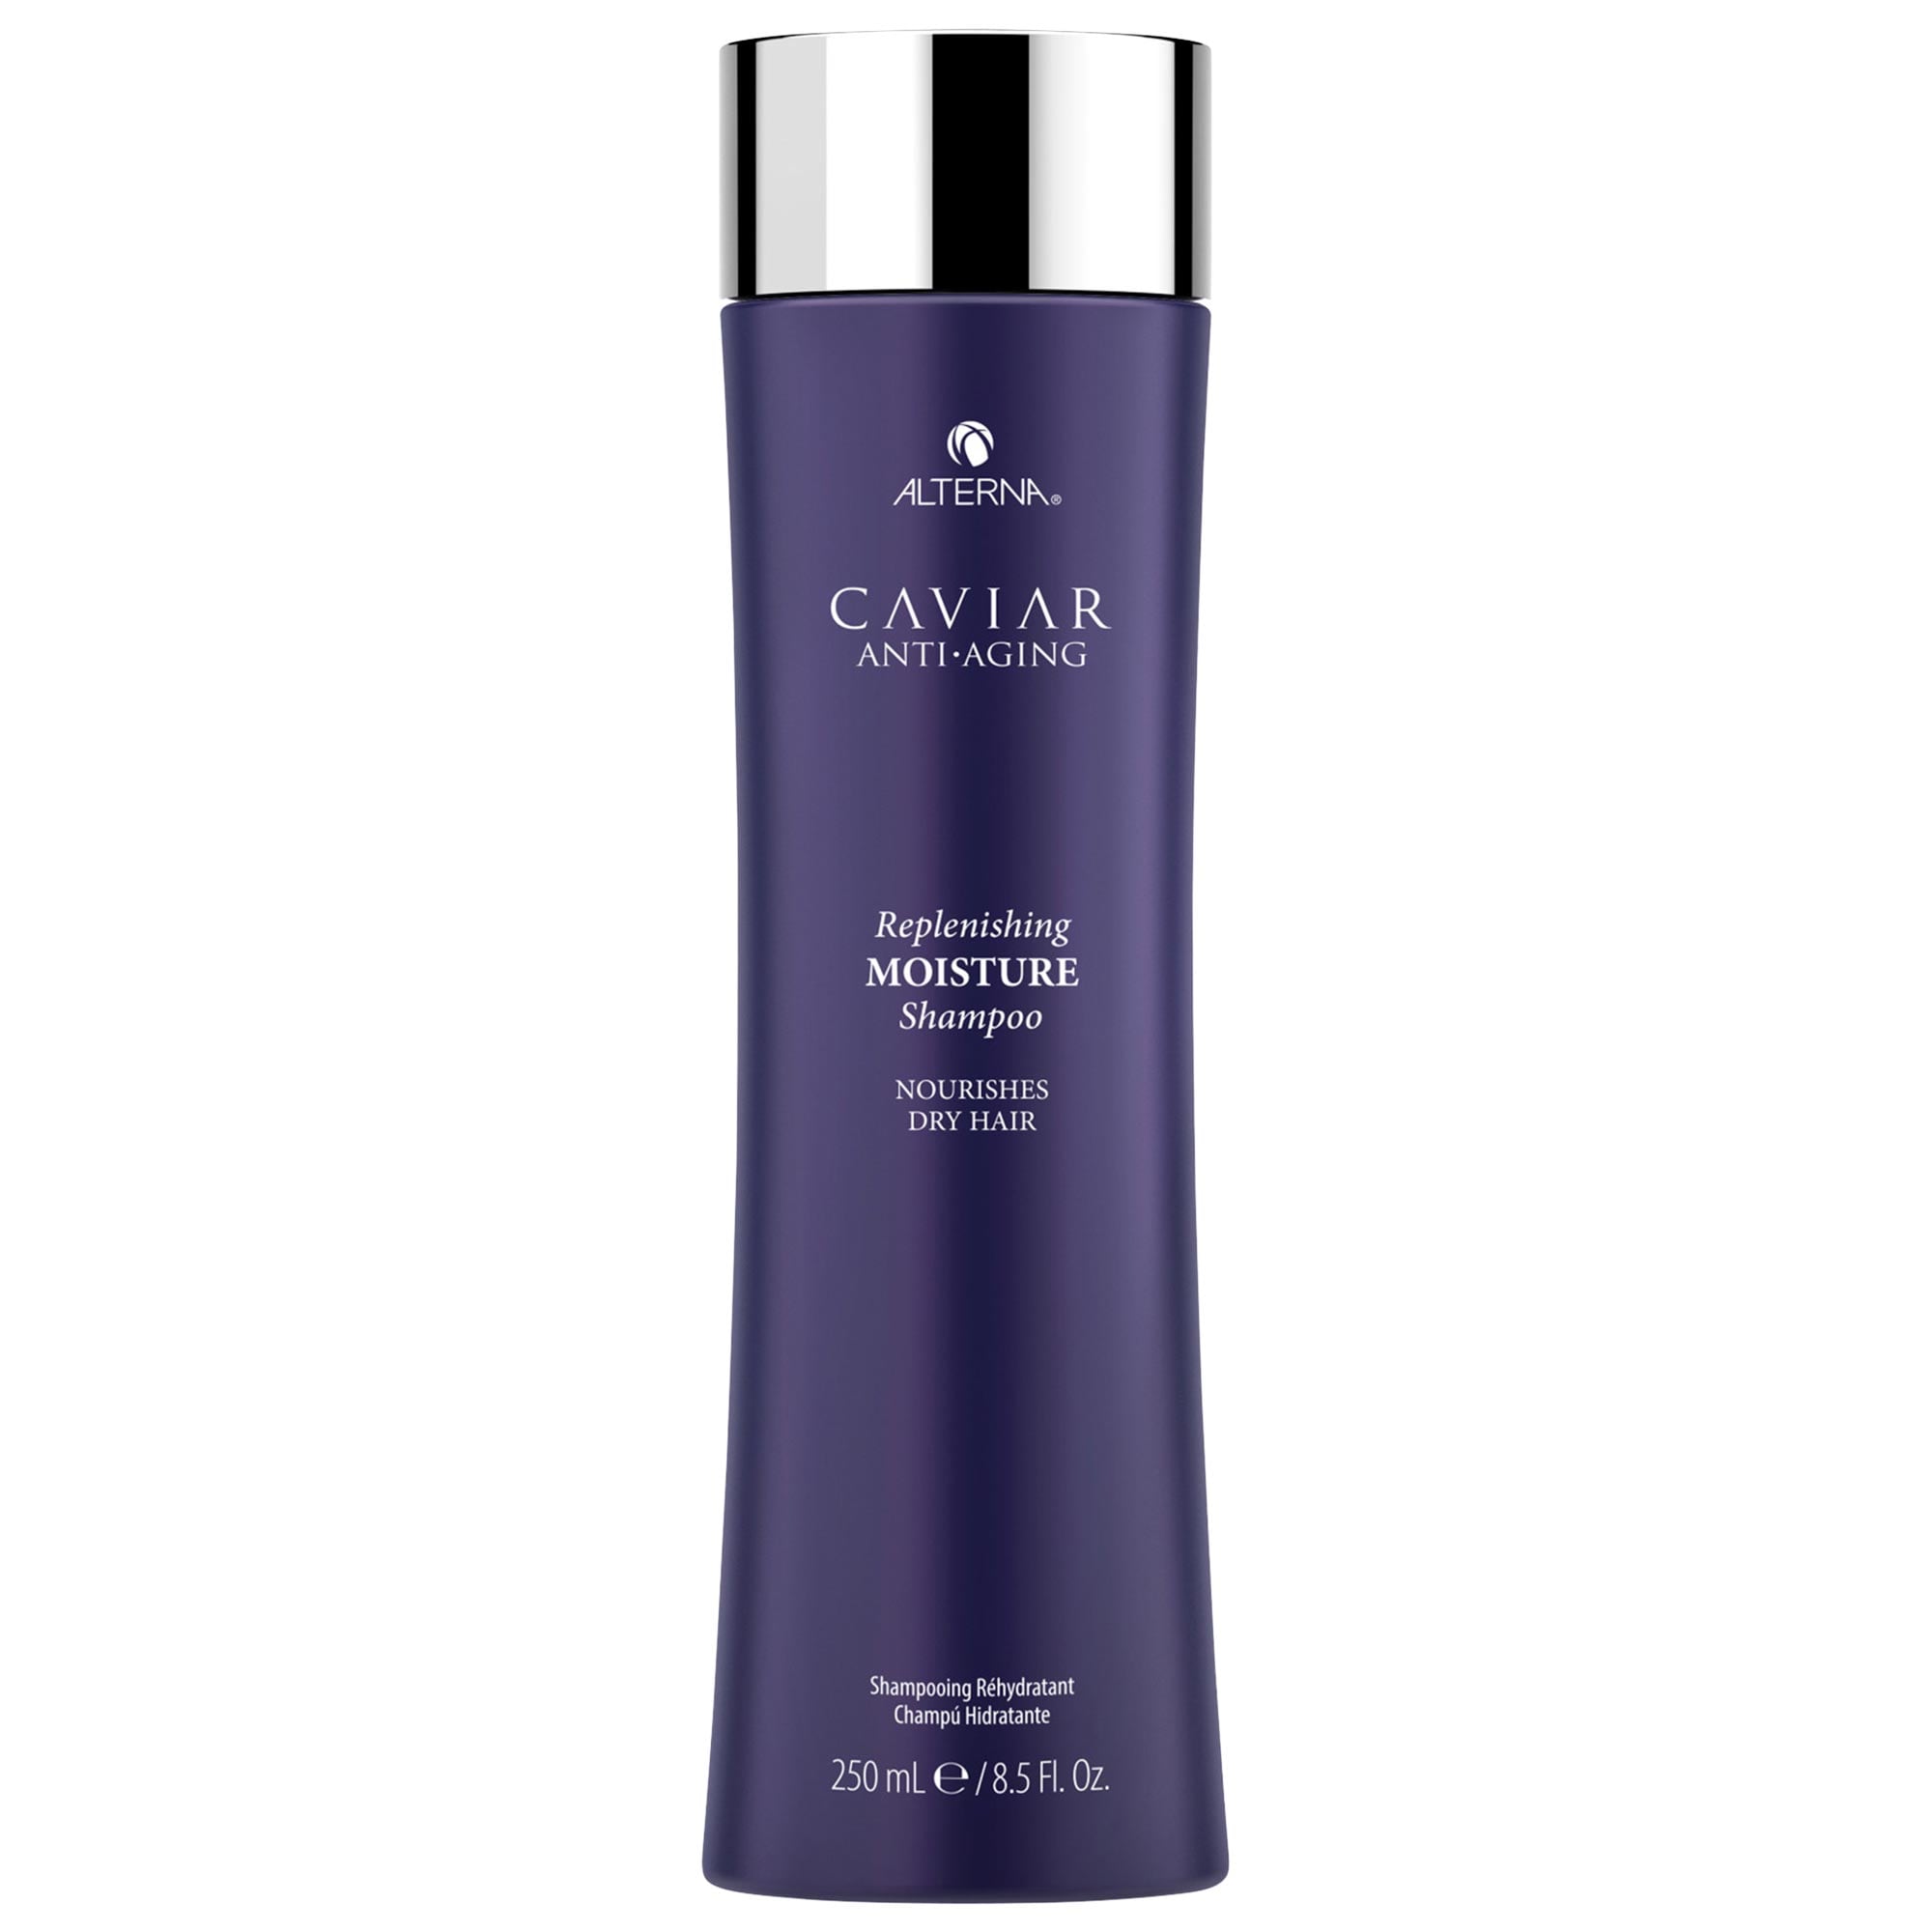 CAVIAR Anti-Aging® Replenishing Moisture Shampoo ALTERNA Haircare